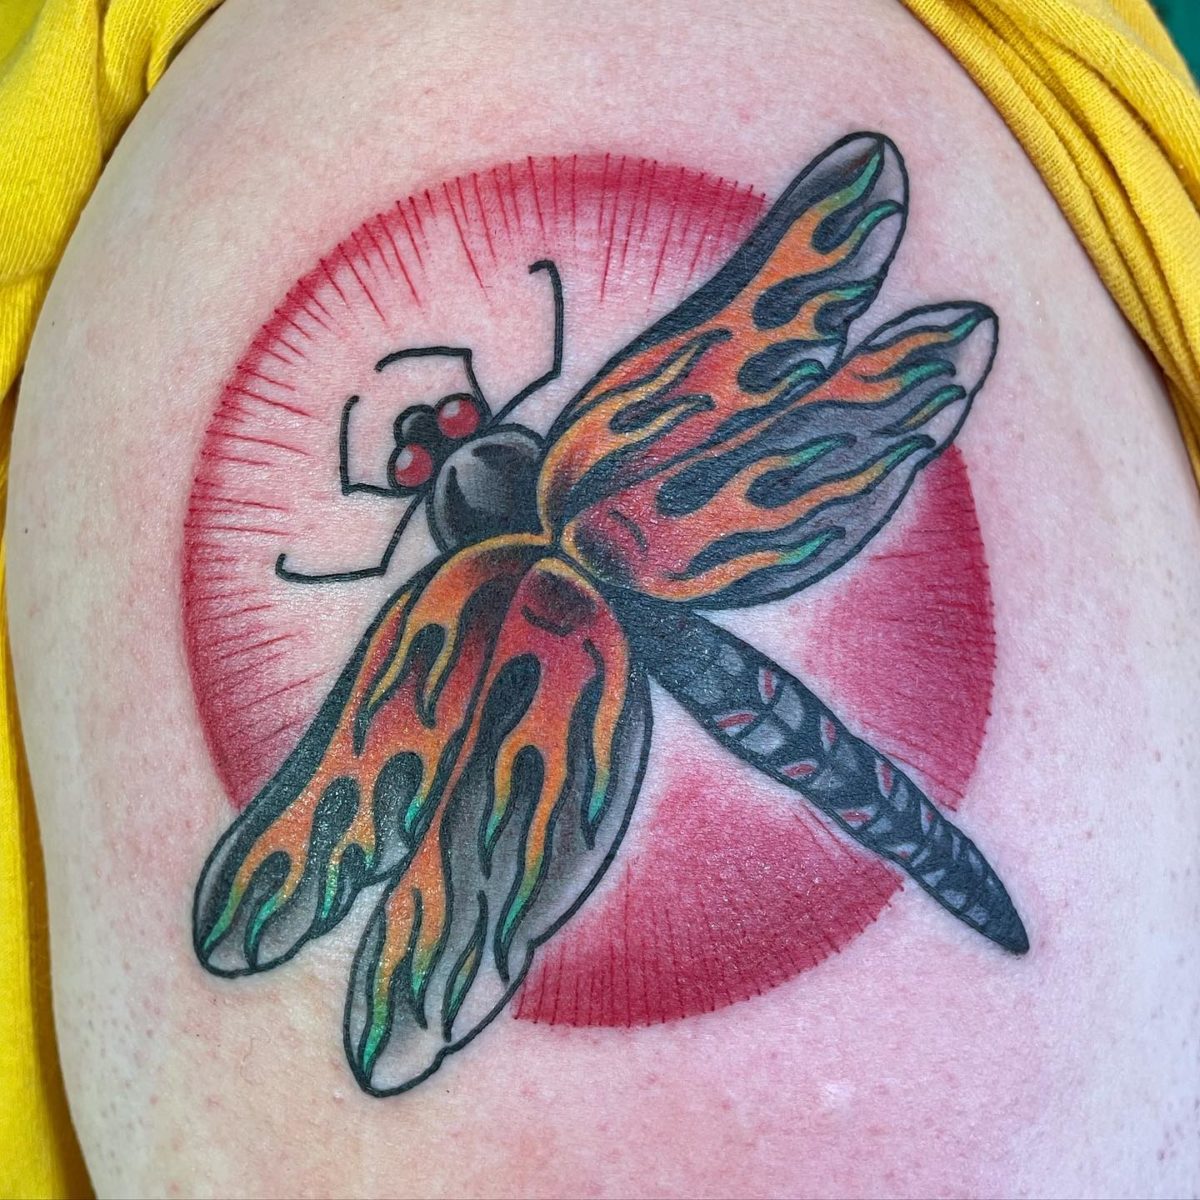 Dragonfly Tattoo Ideas